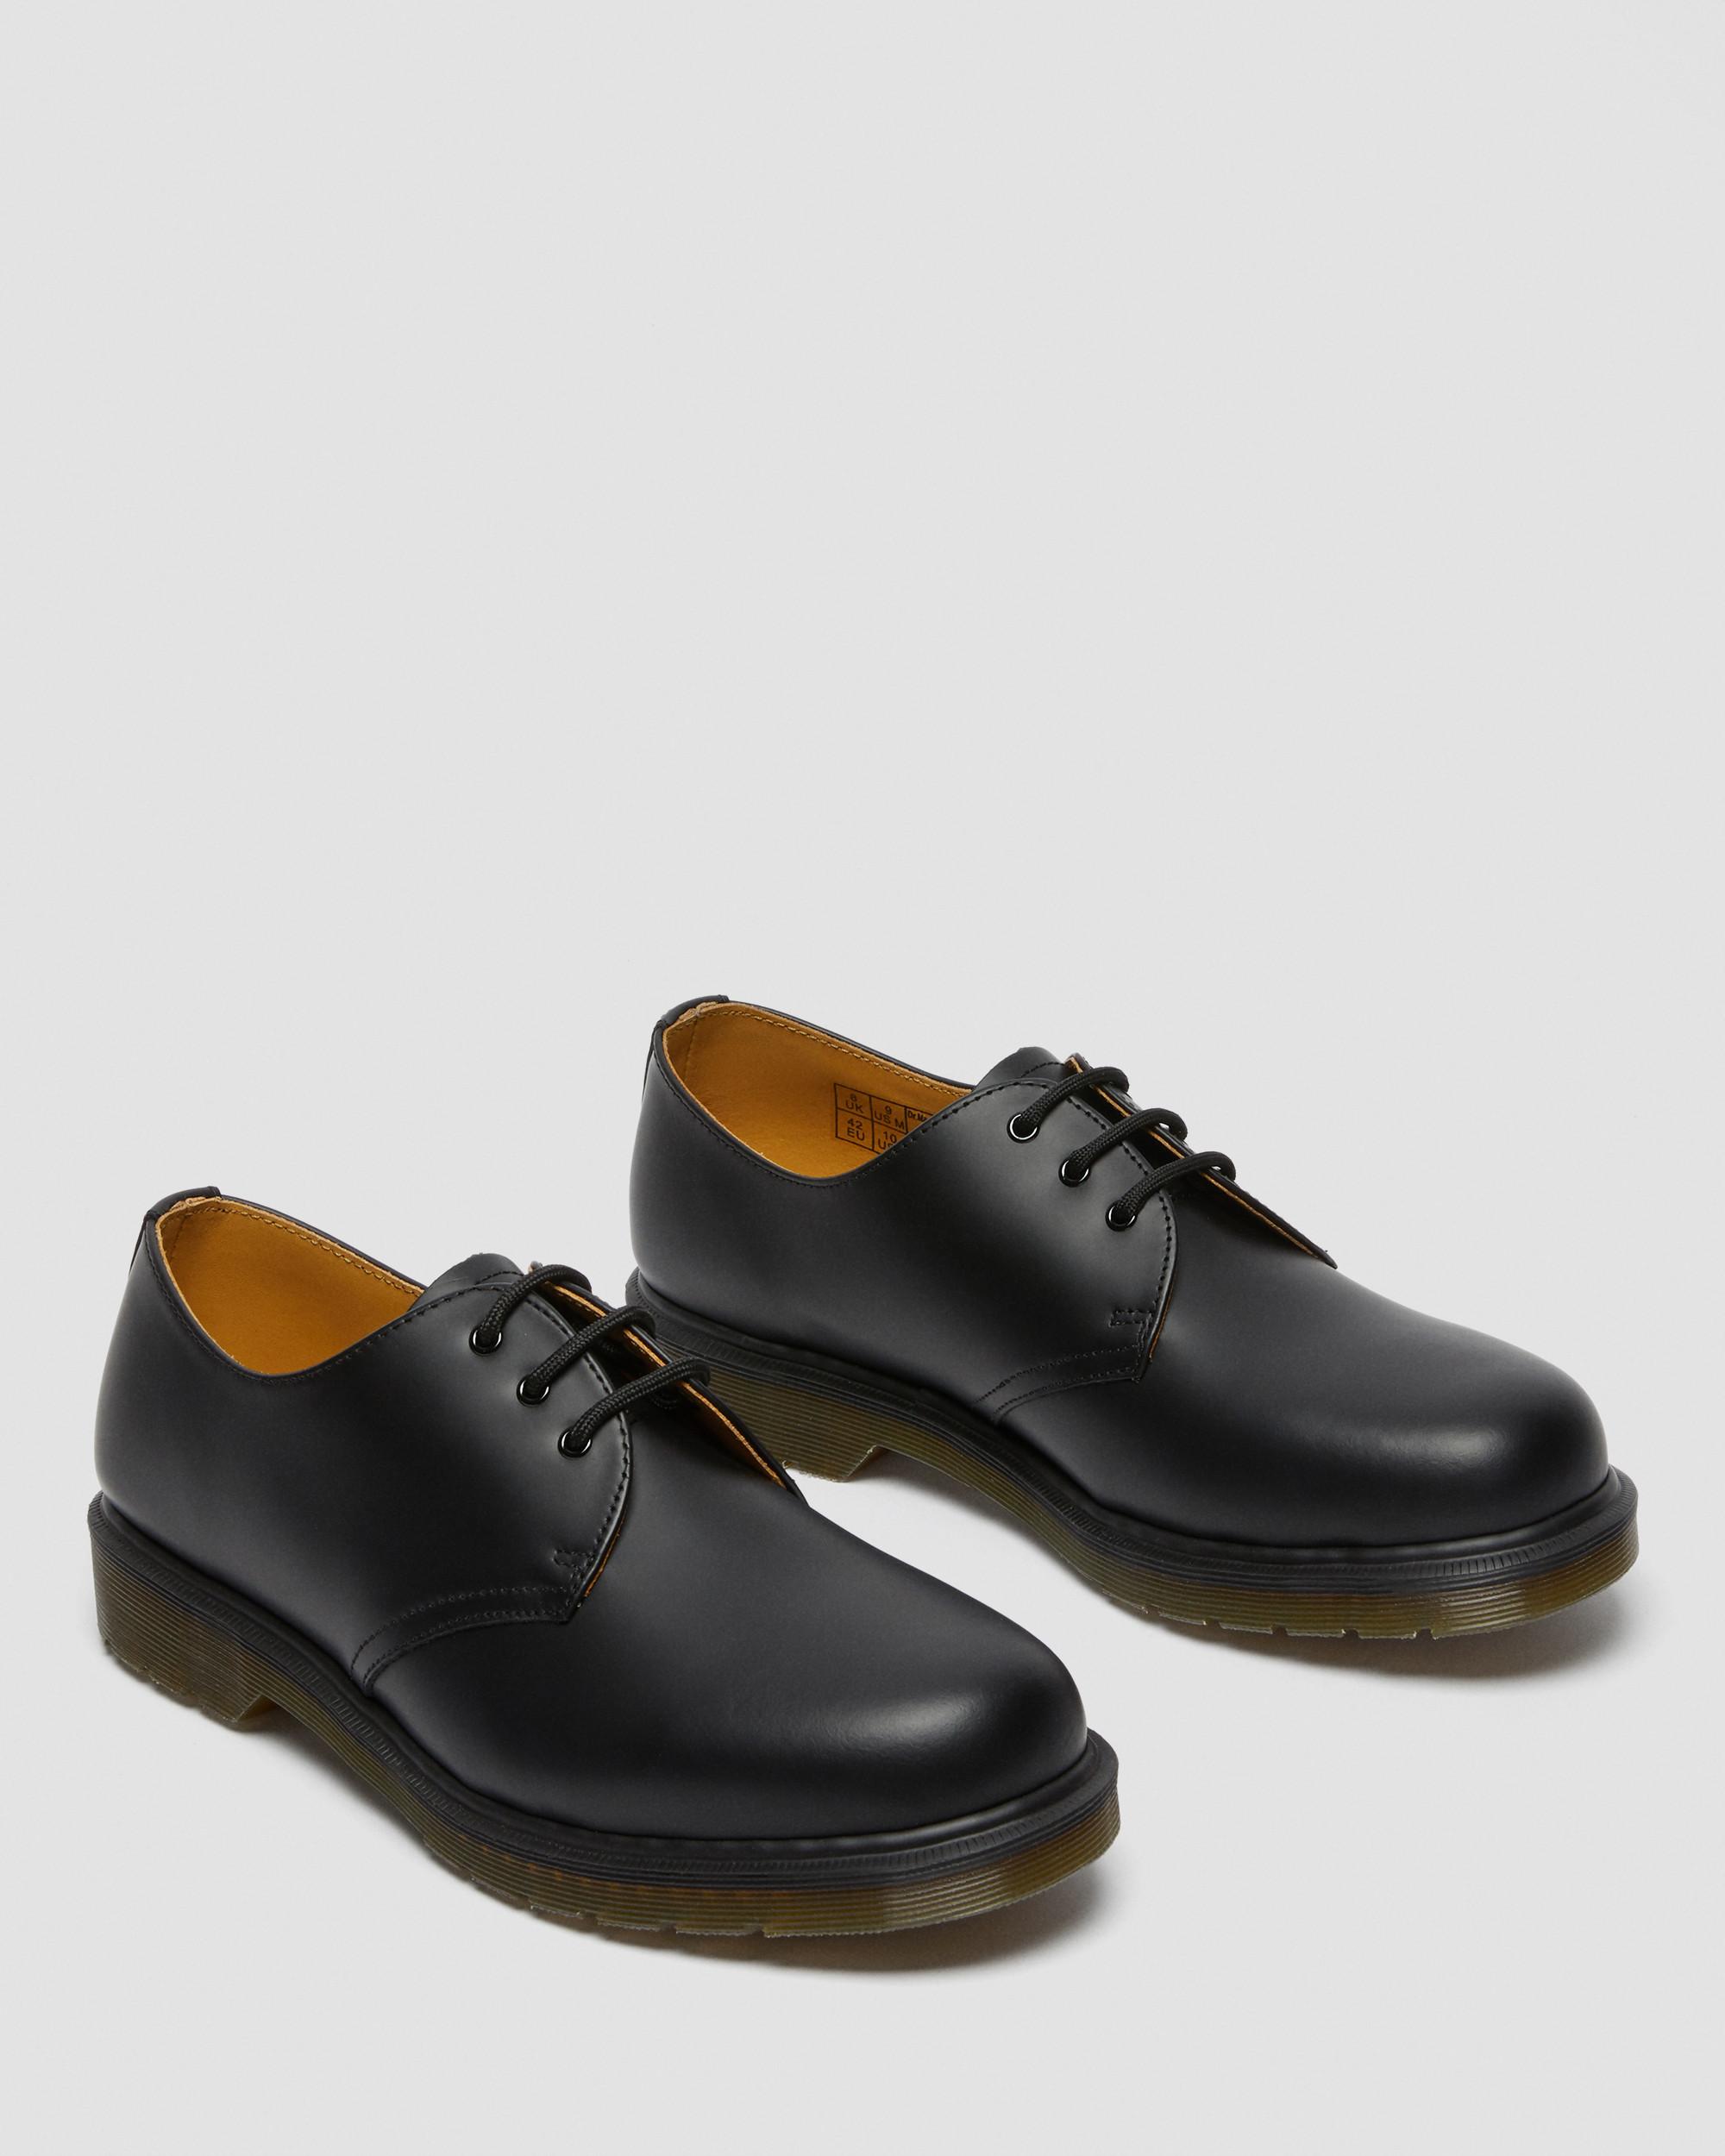 1461 Plain Welt Smooth Leather Oxford Shoes1461 Plain Welt Smooth Leather Oxford Shoes Dr. Martens